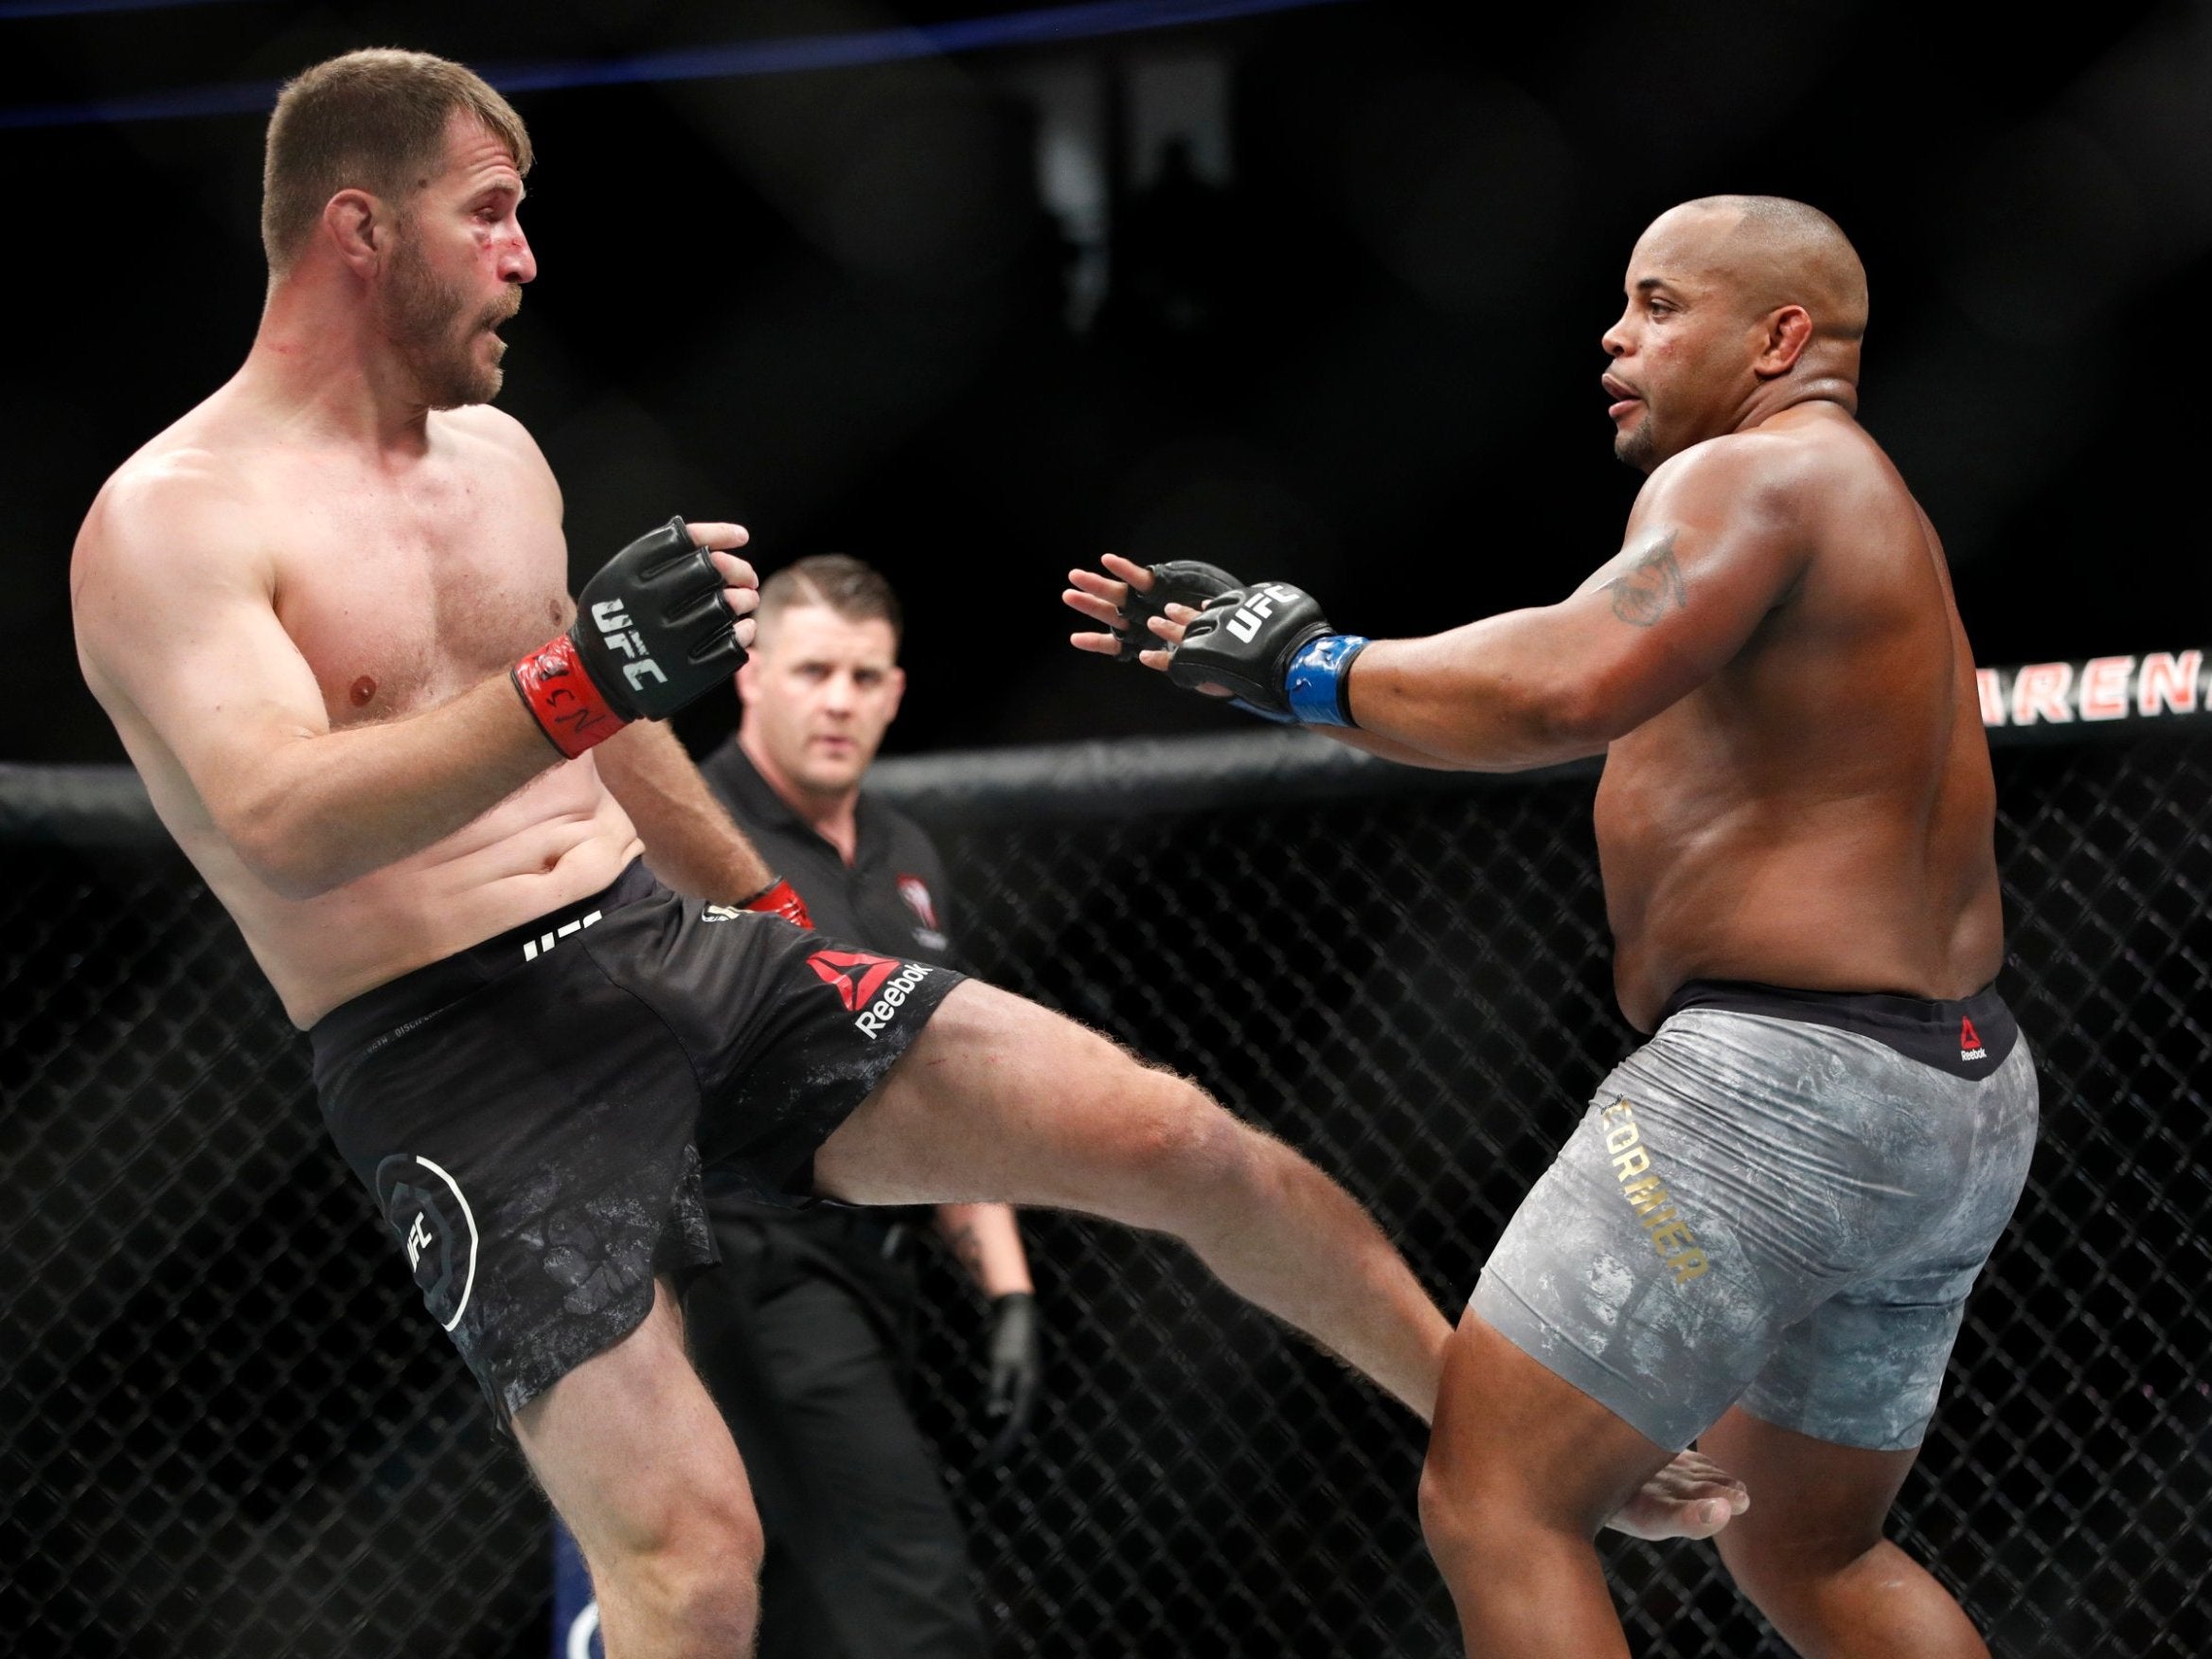 Is UFC champ Jon Jones ducking heavyweight titlist Stipe Miocic?